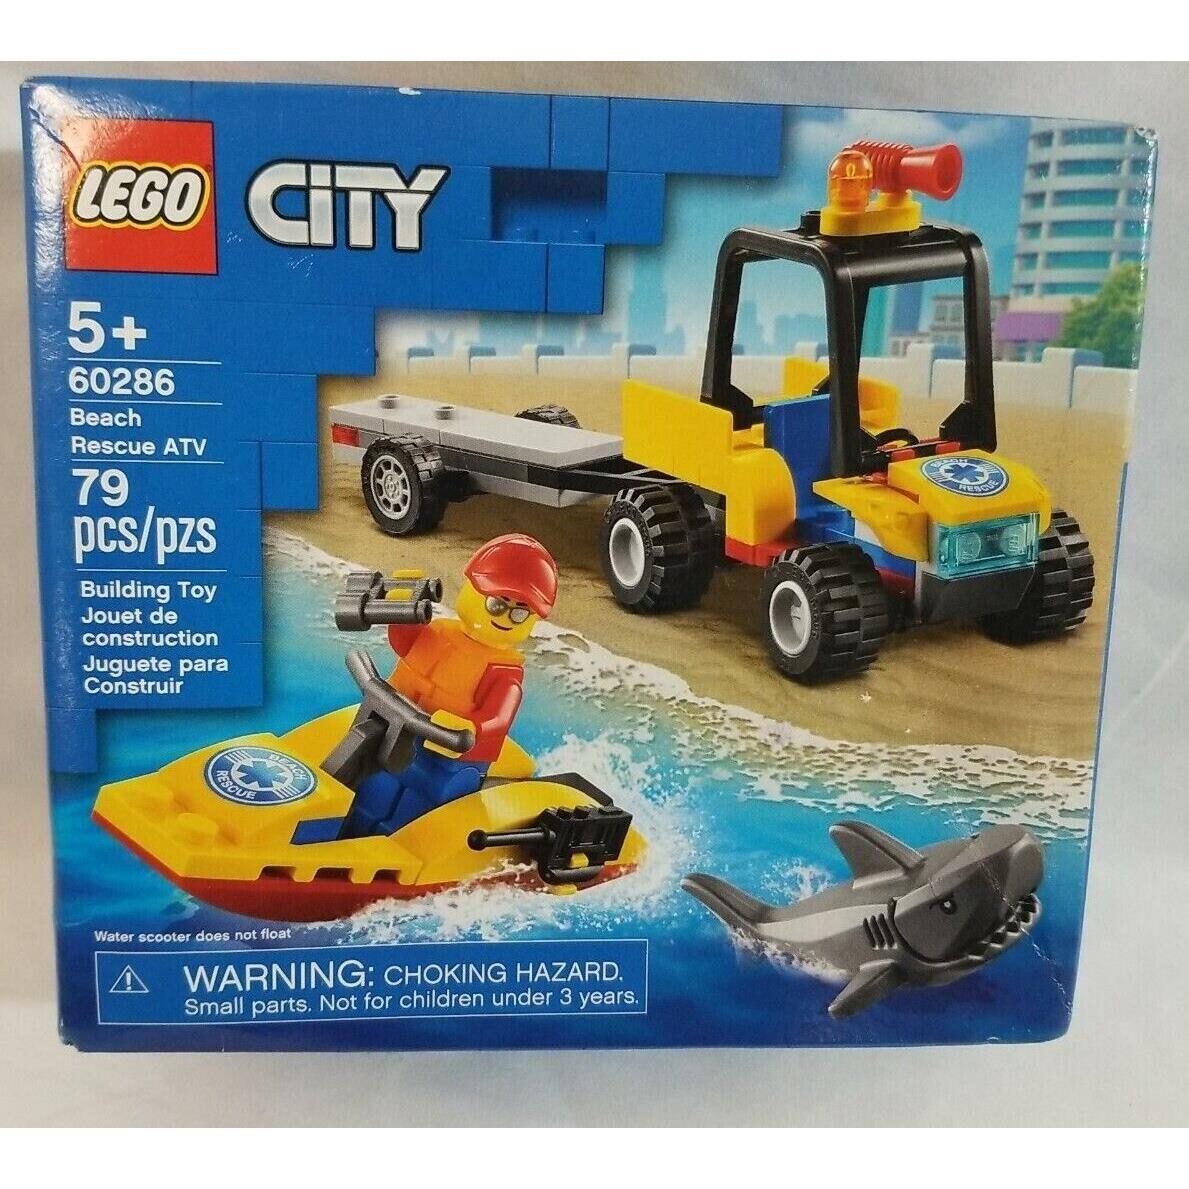 Lego City: Beach Rescue Atv 60286 Building Kit 79 Pcs